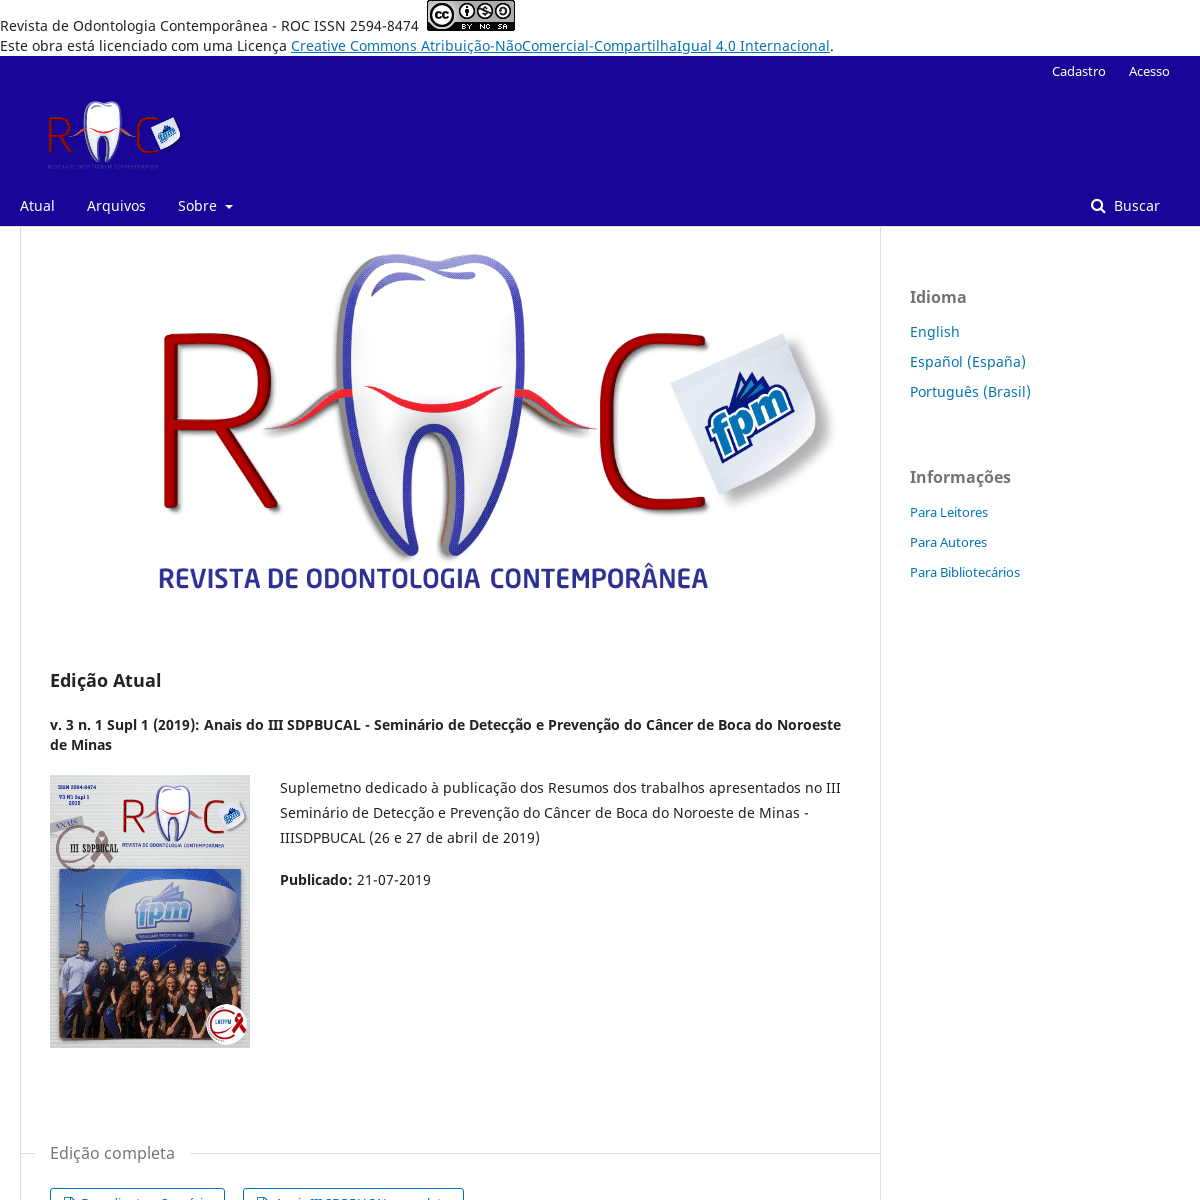 A complete backup of rocfpm.com